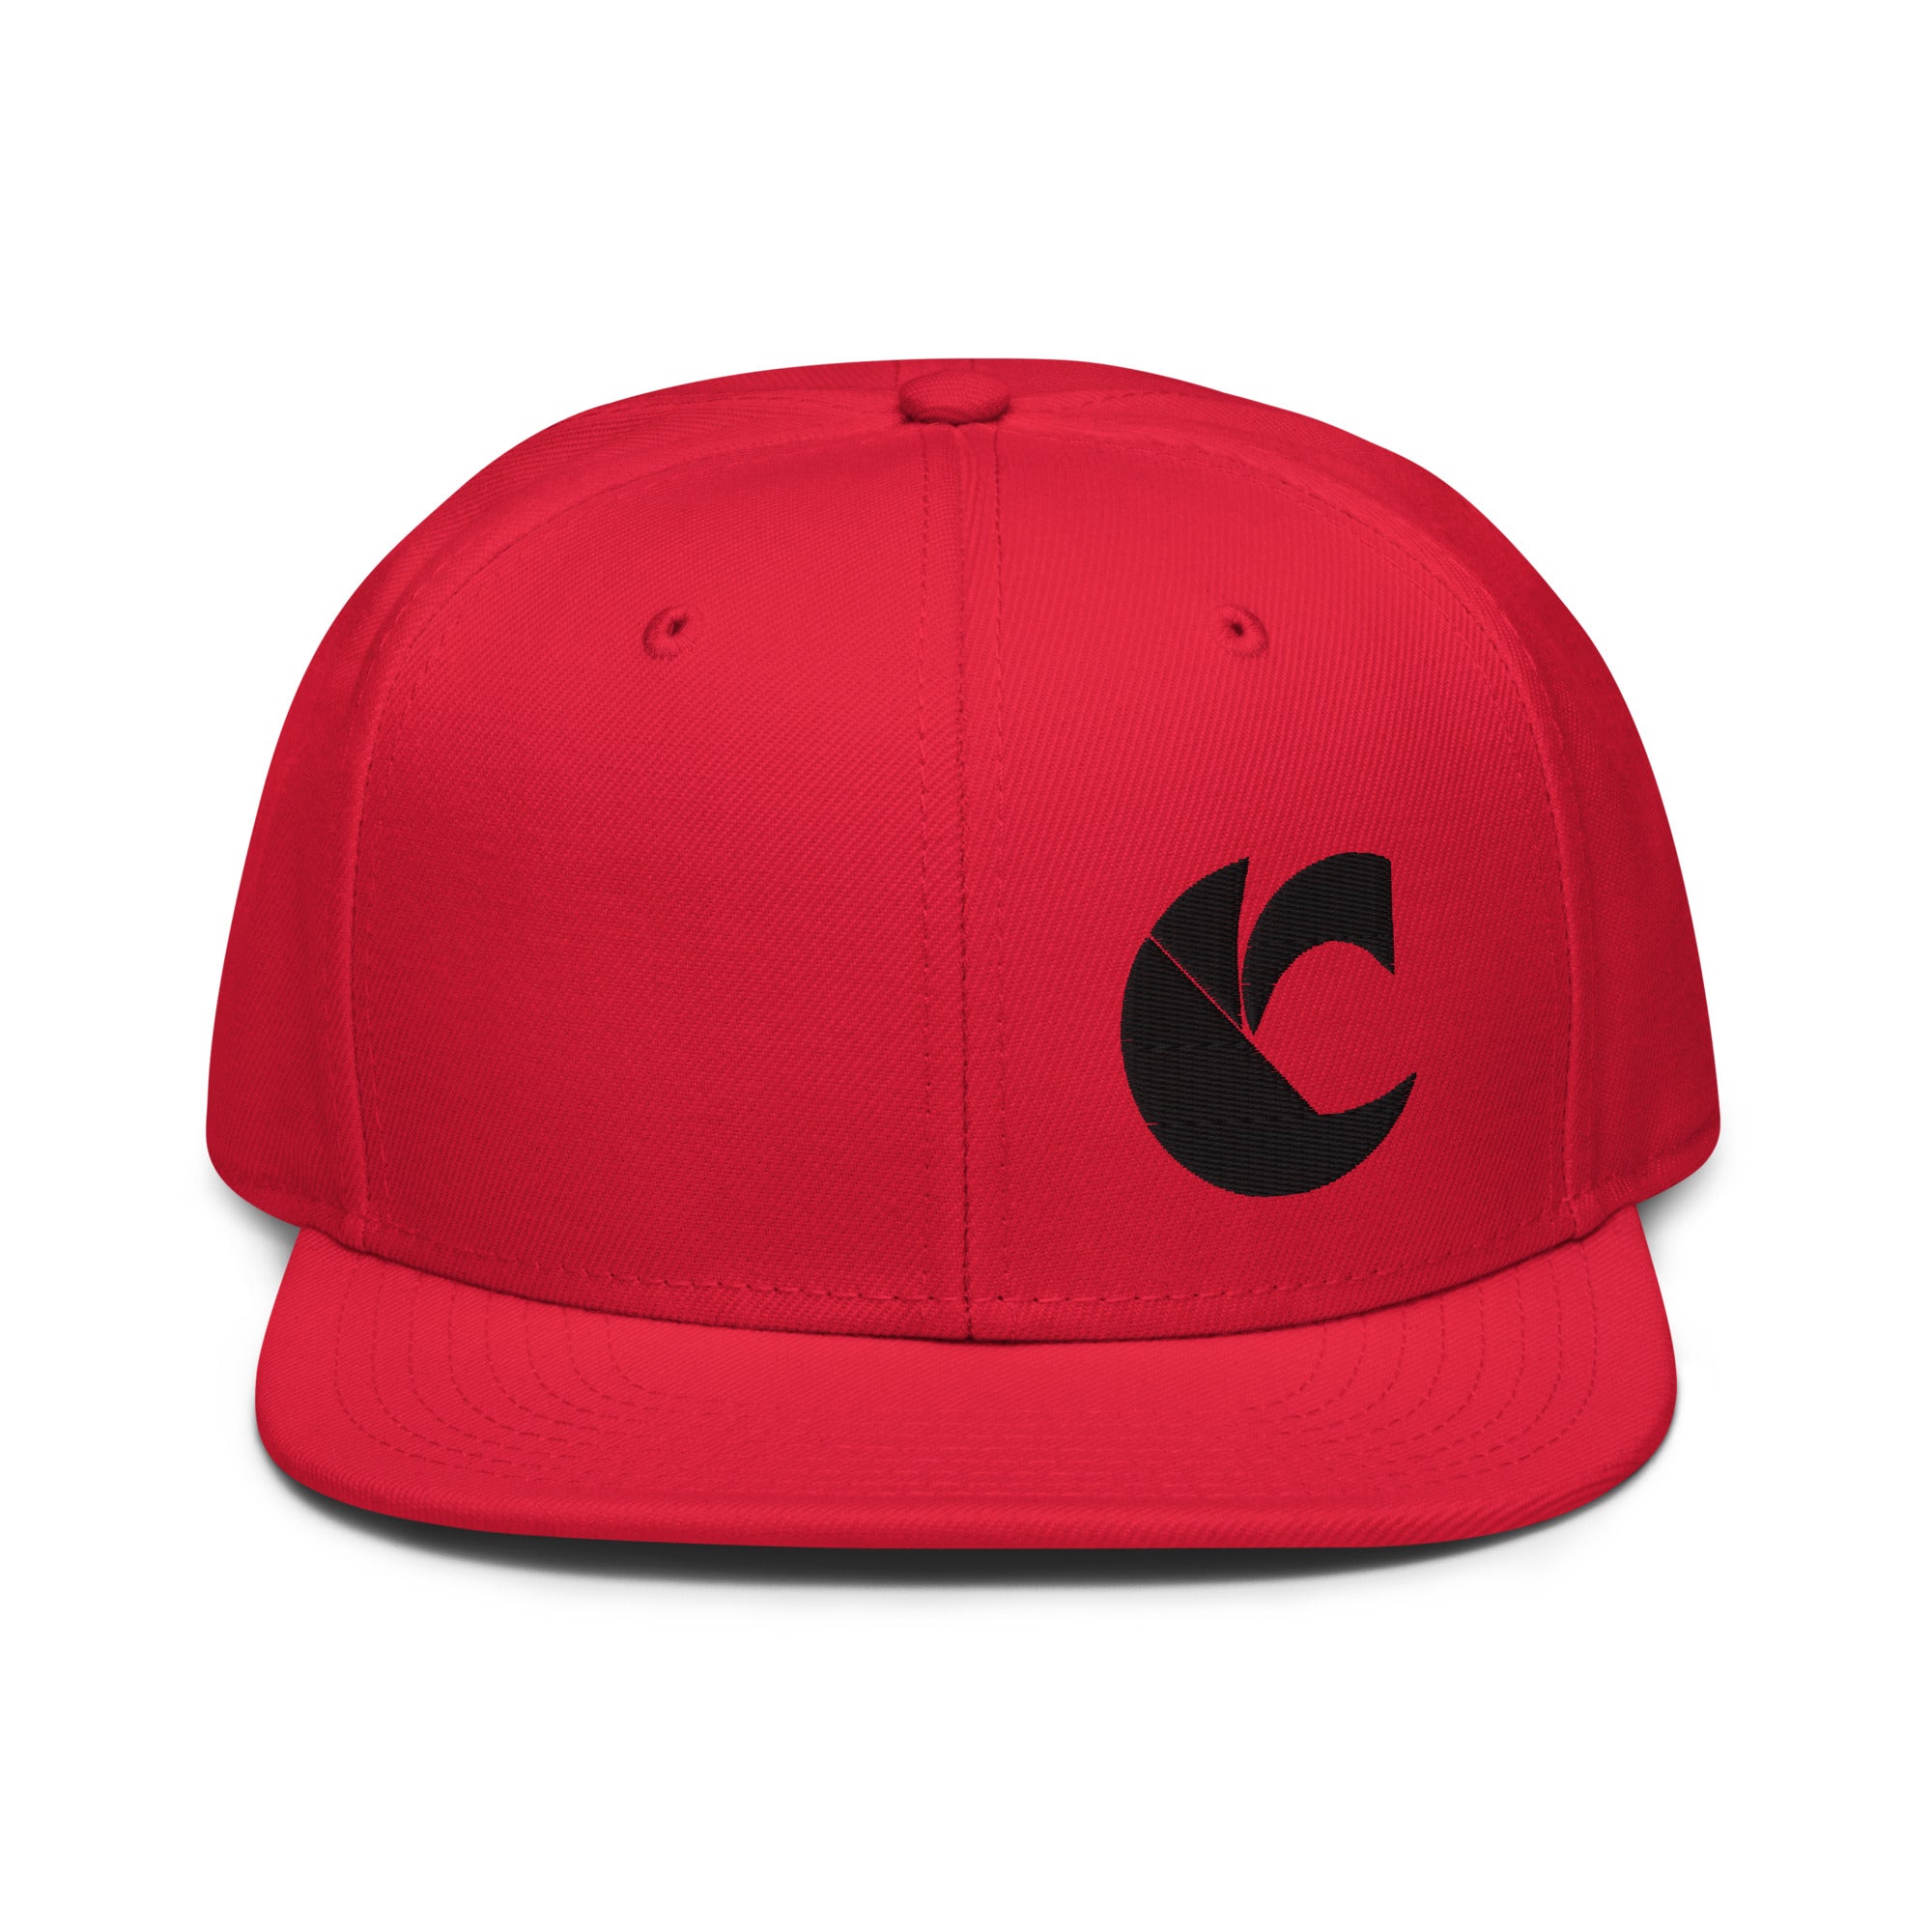 Canibus - Snapback Hat